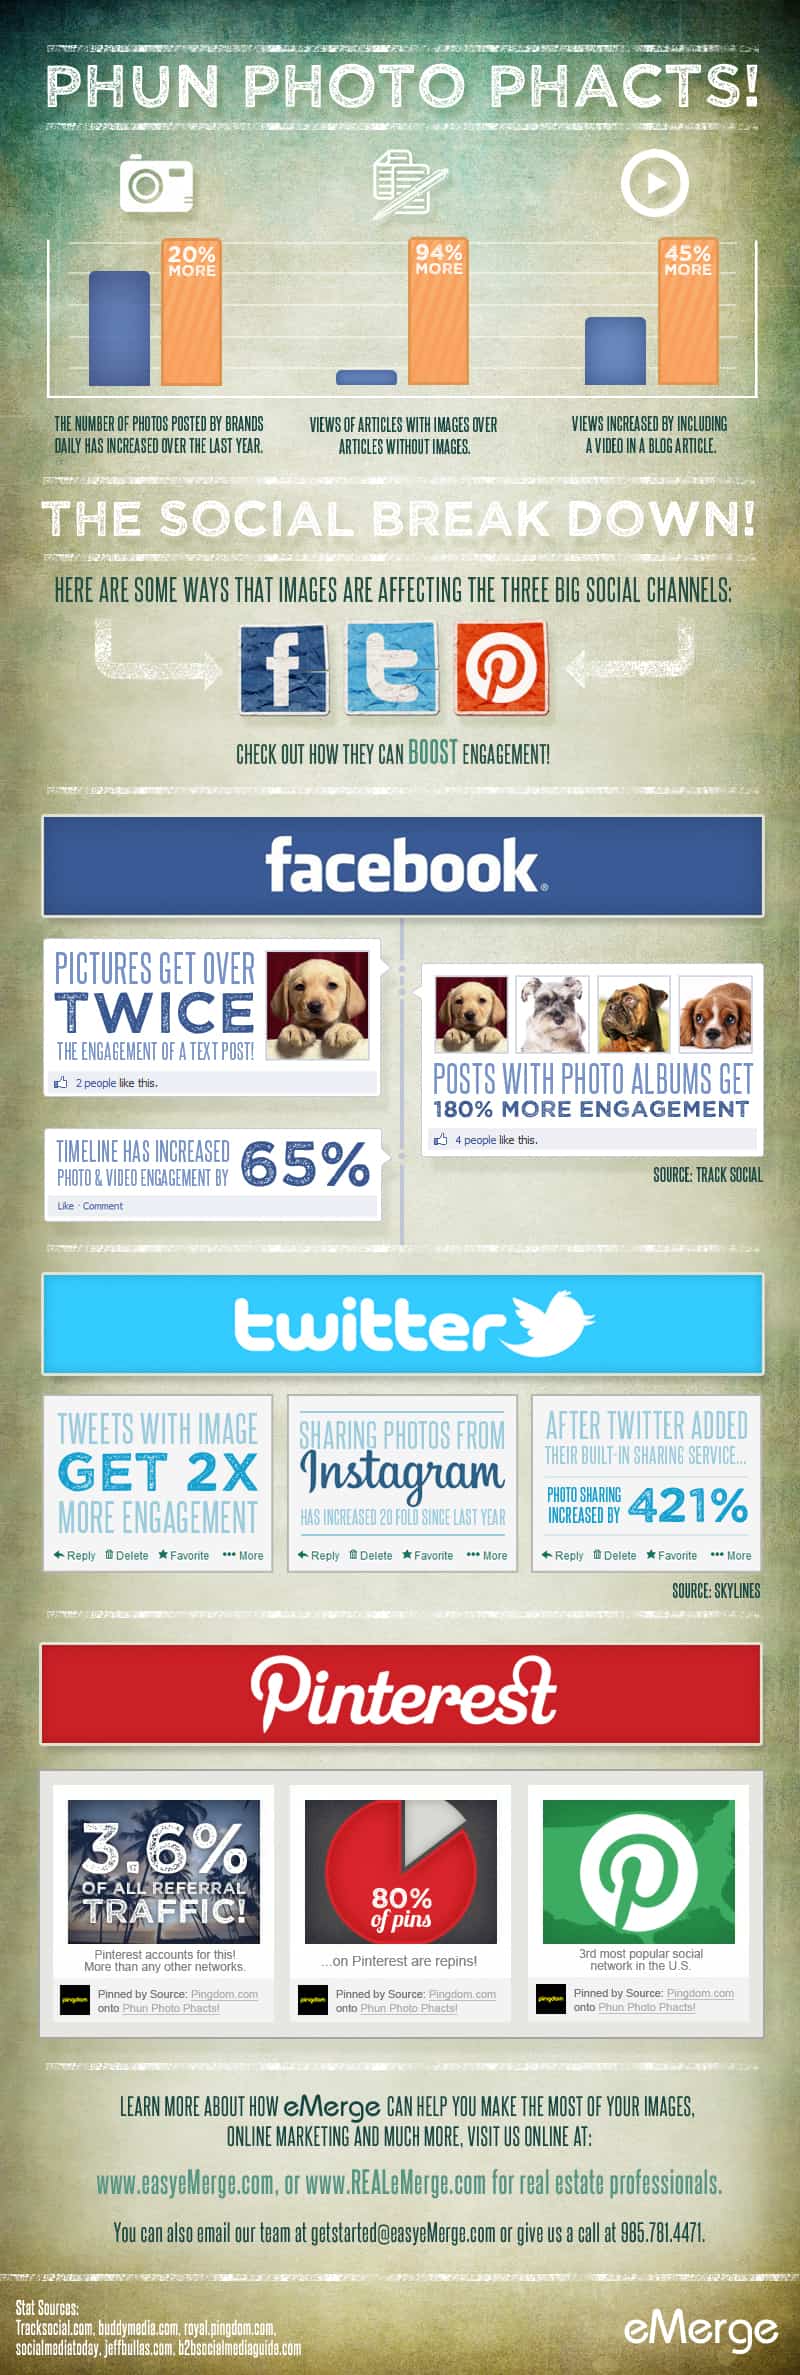 social-media-photo-facts